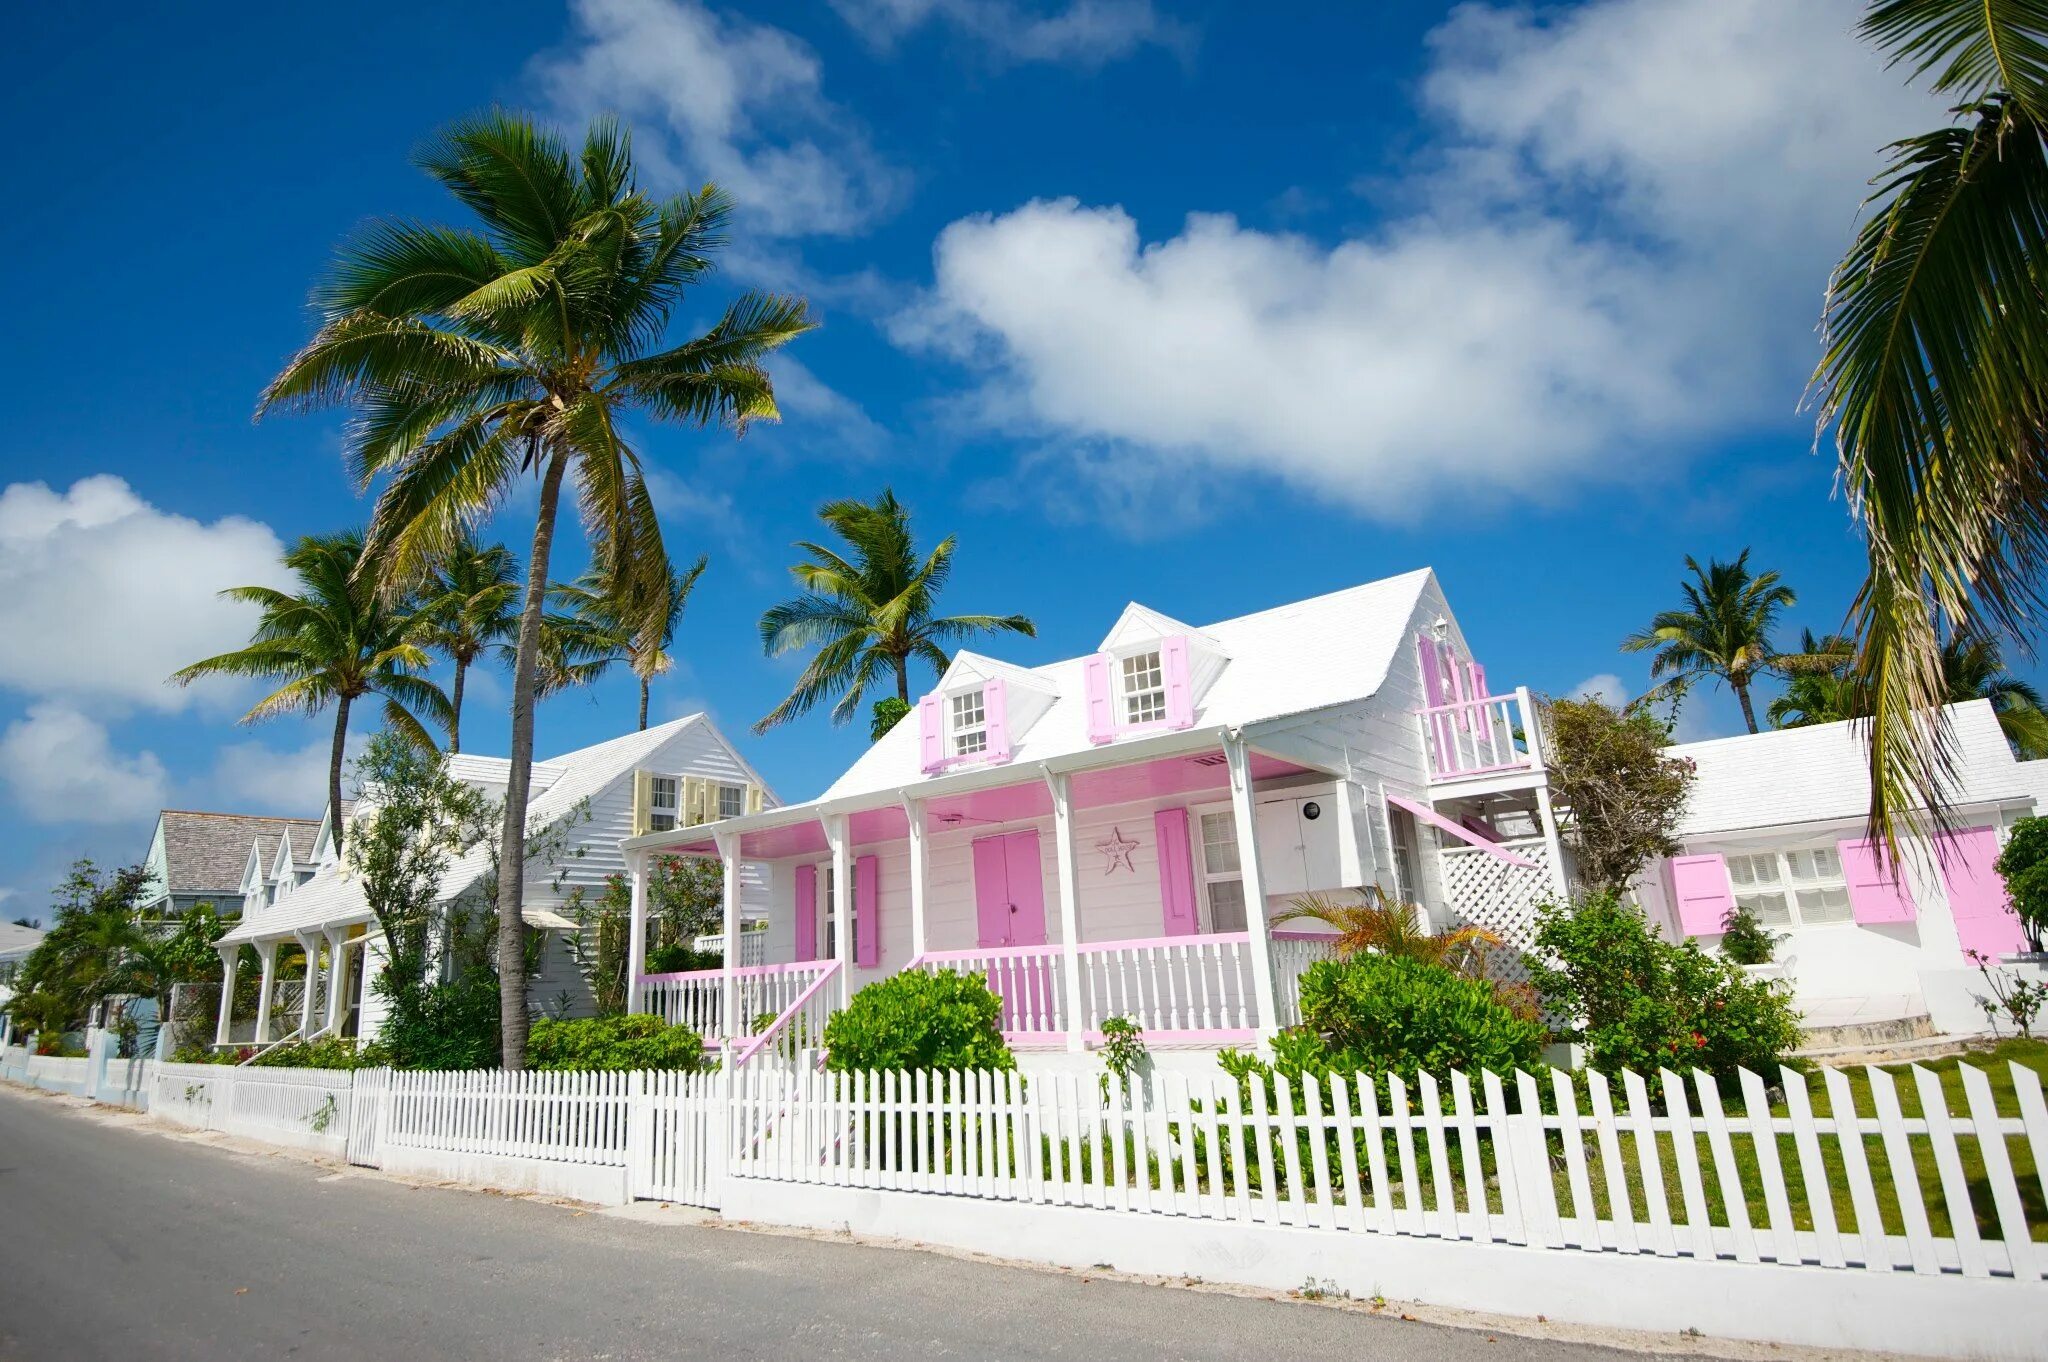 Harbor island. Остров Харбор Багамские острова. Pink Sands Beach Багамские острова. Харбор Багамы. Джордж Таун Багамские острова.